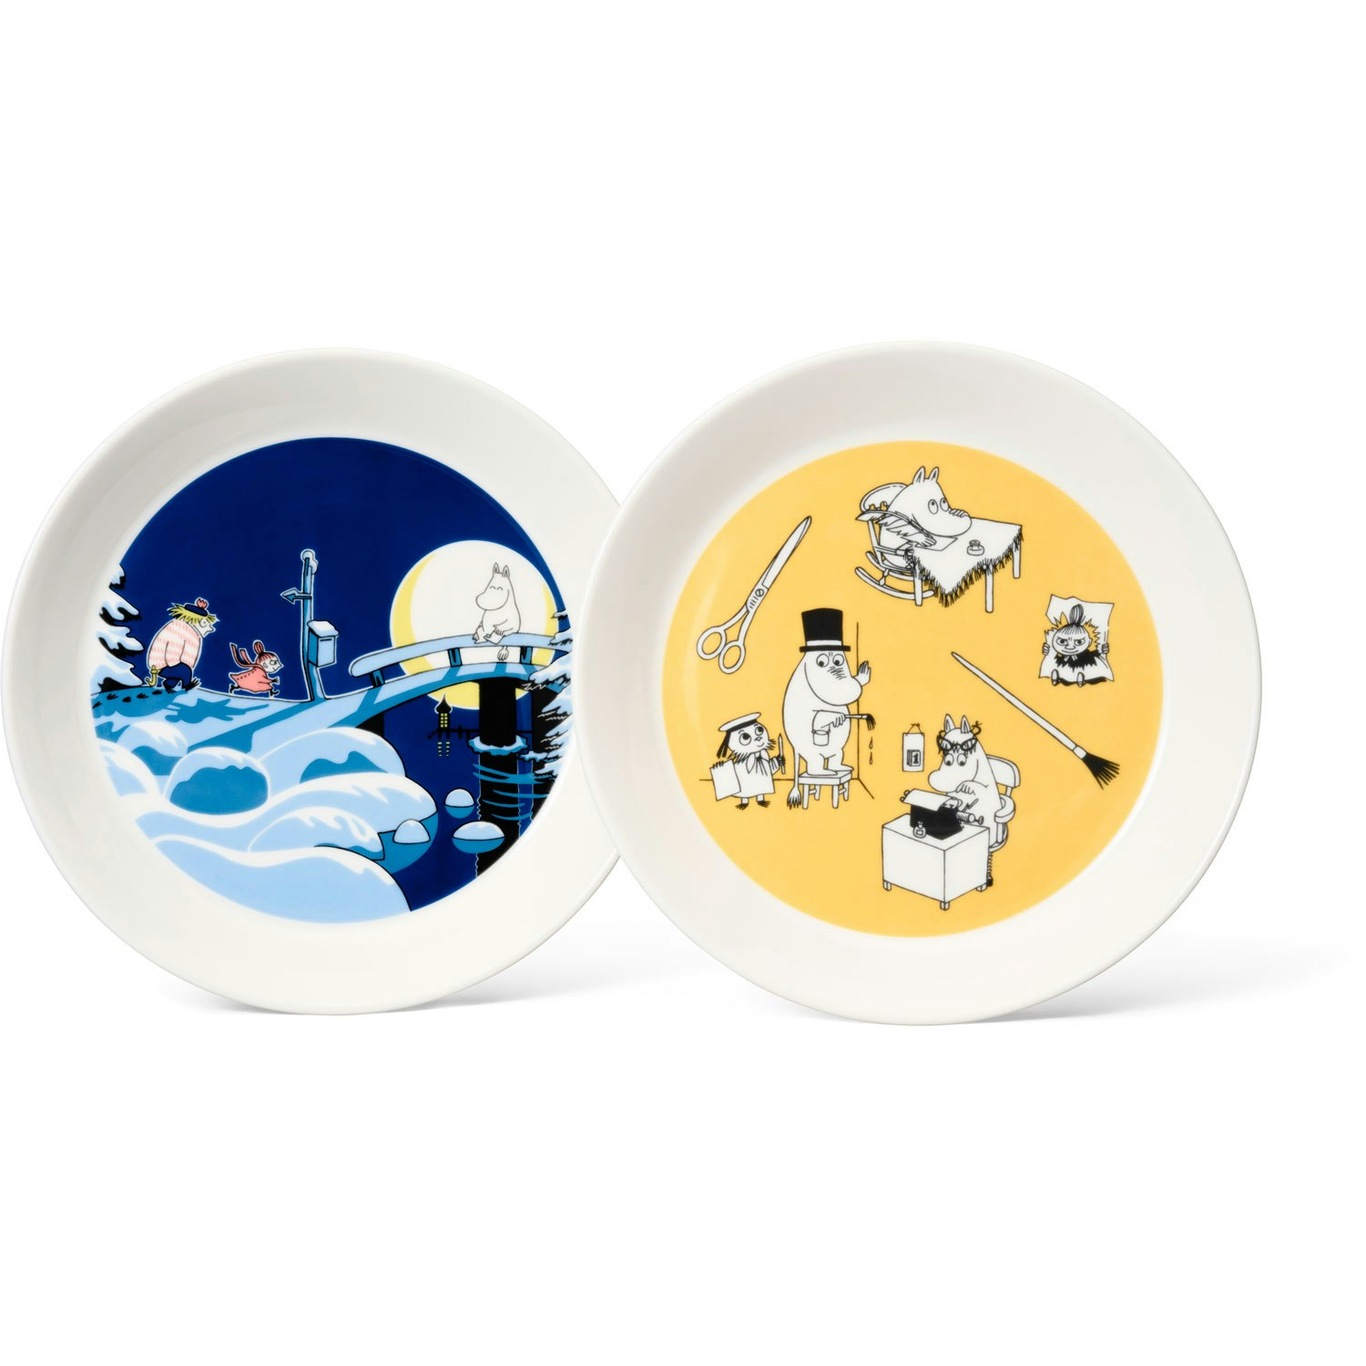 Mumin Plates 19 cm 2-pack, Office & Winter Night